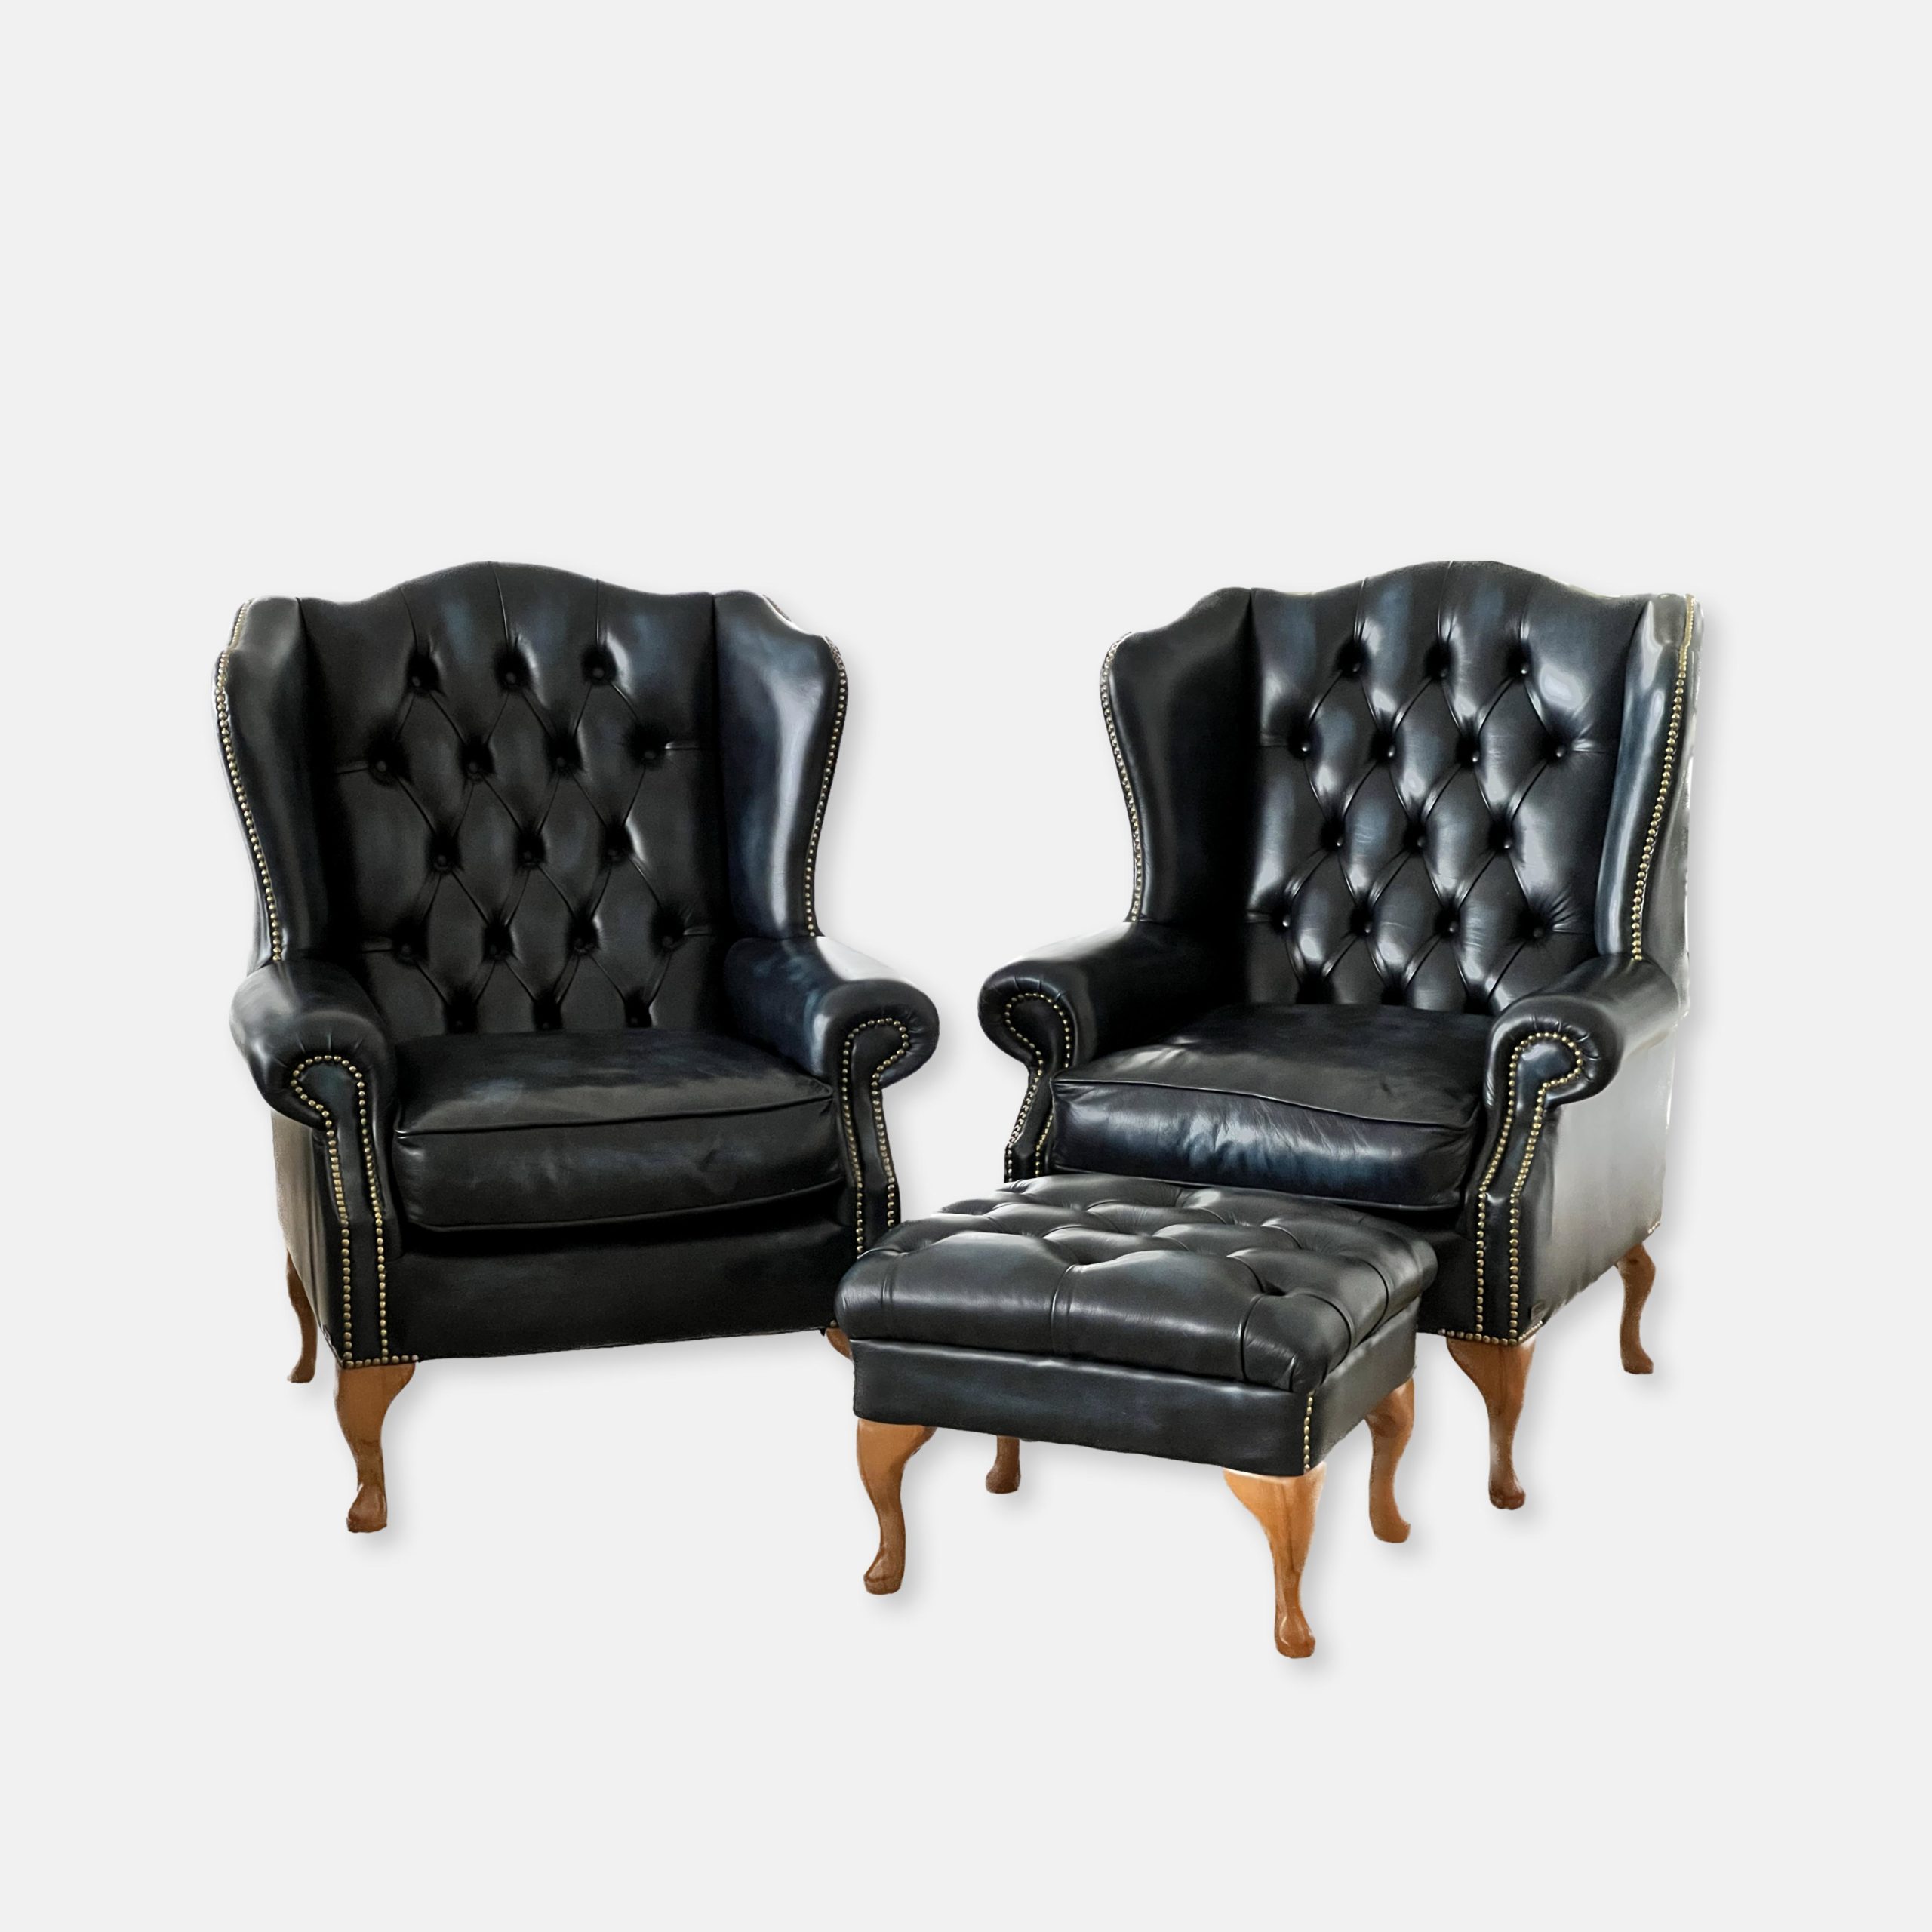 Duo de fauteuils et repose-pied Chesterfield en cuir